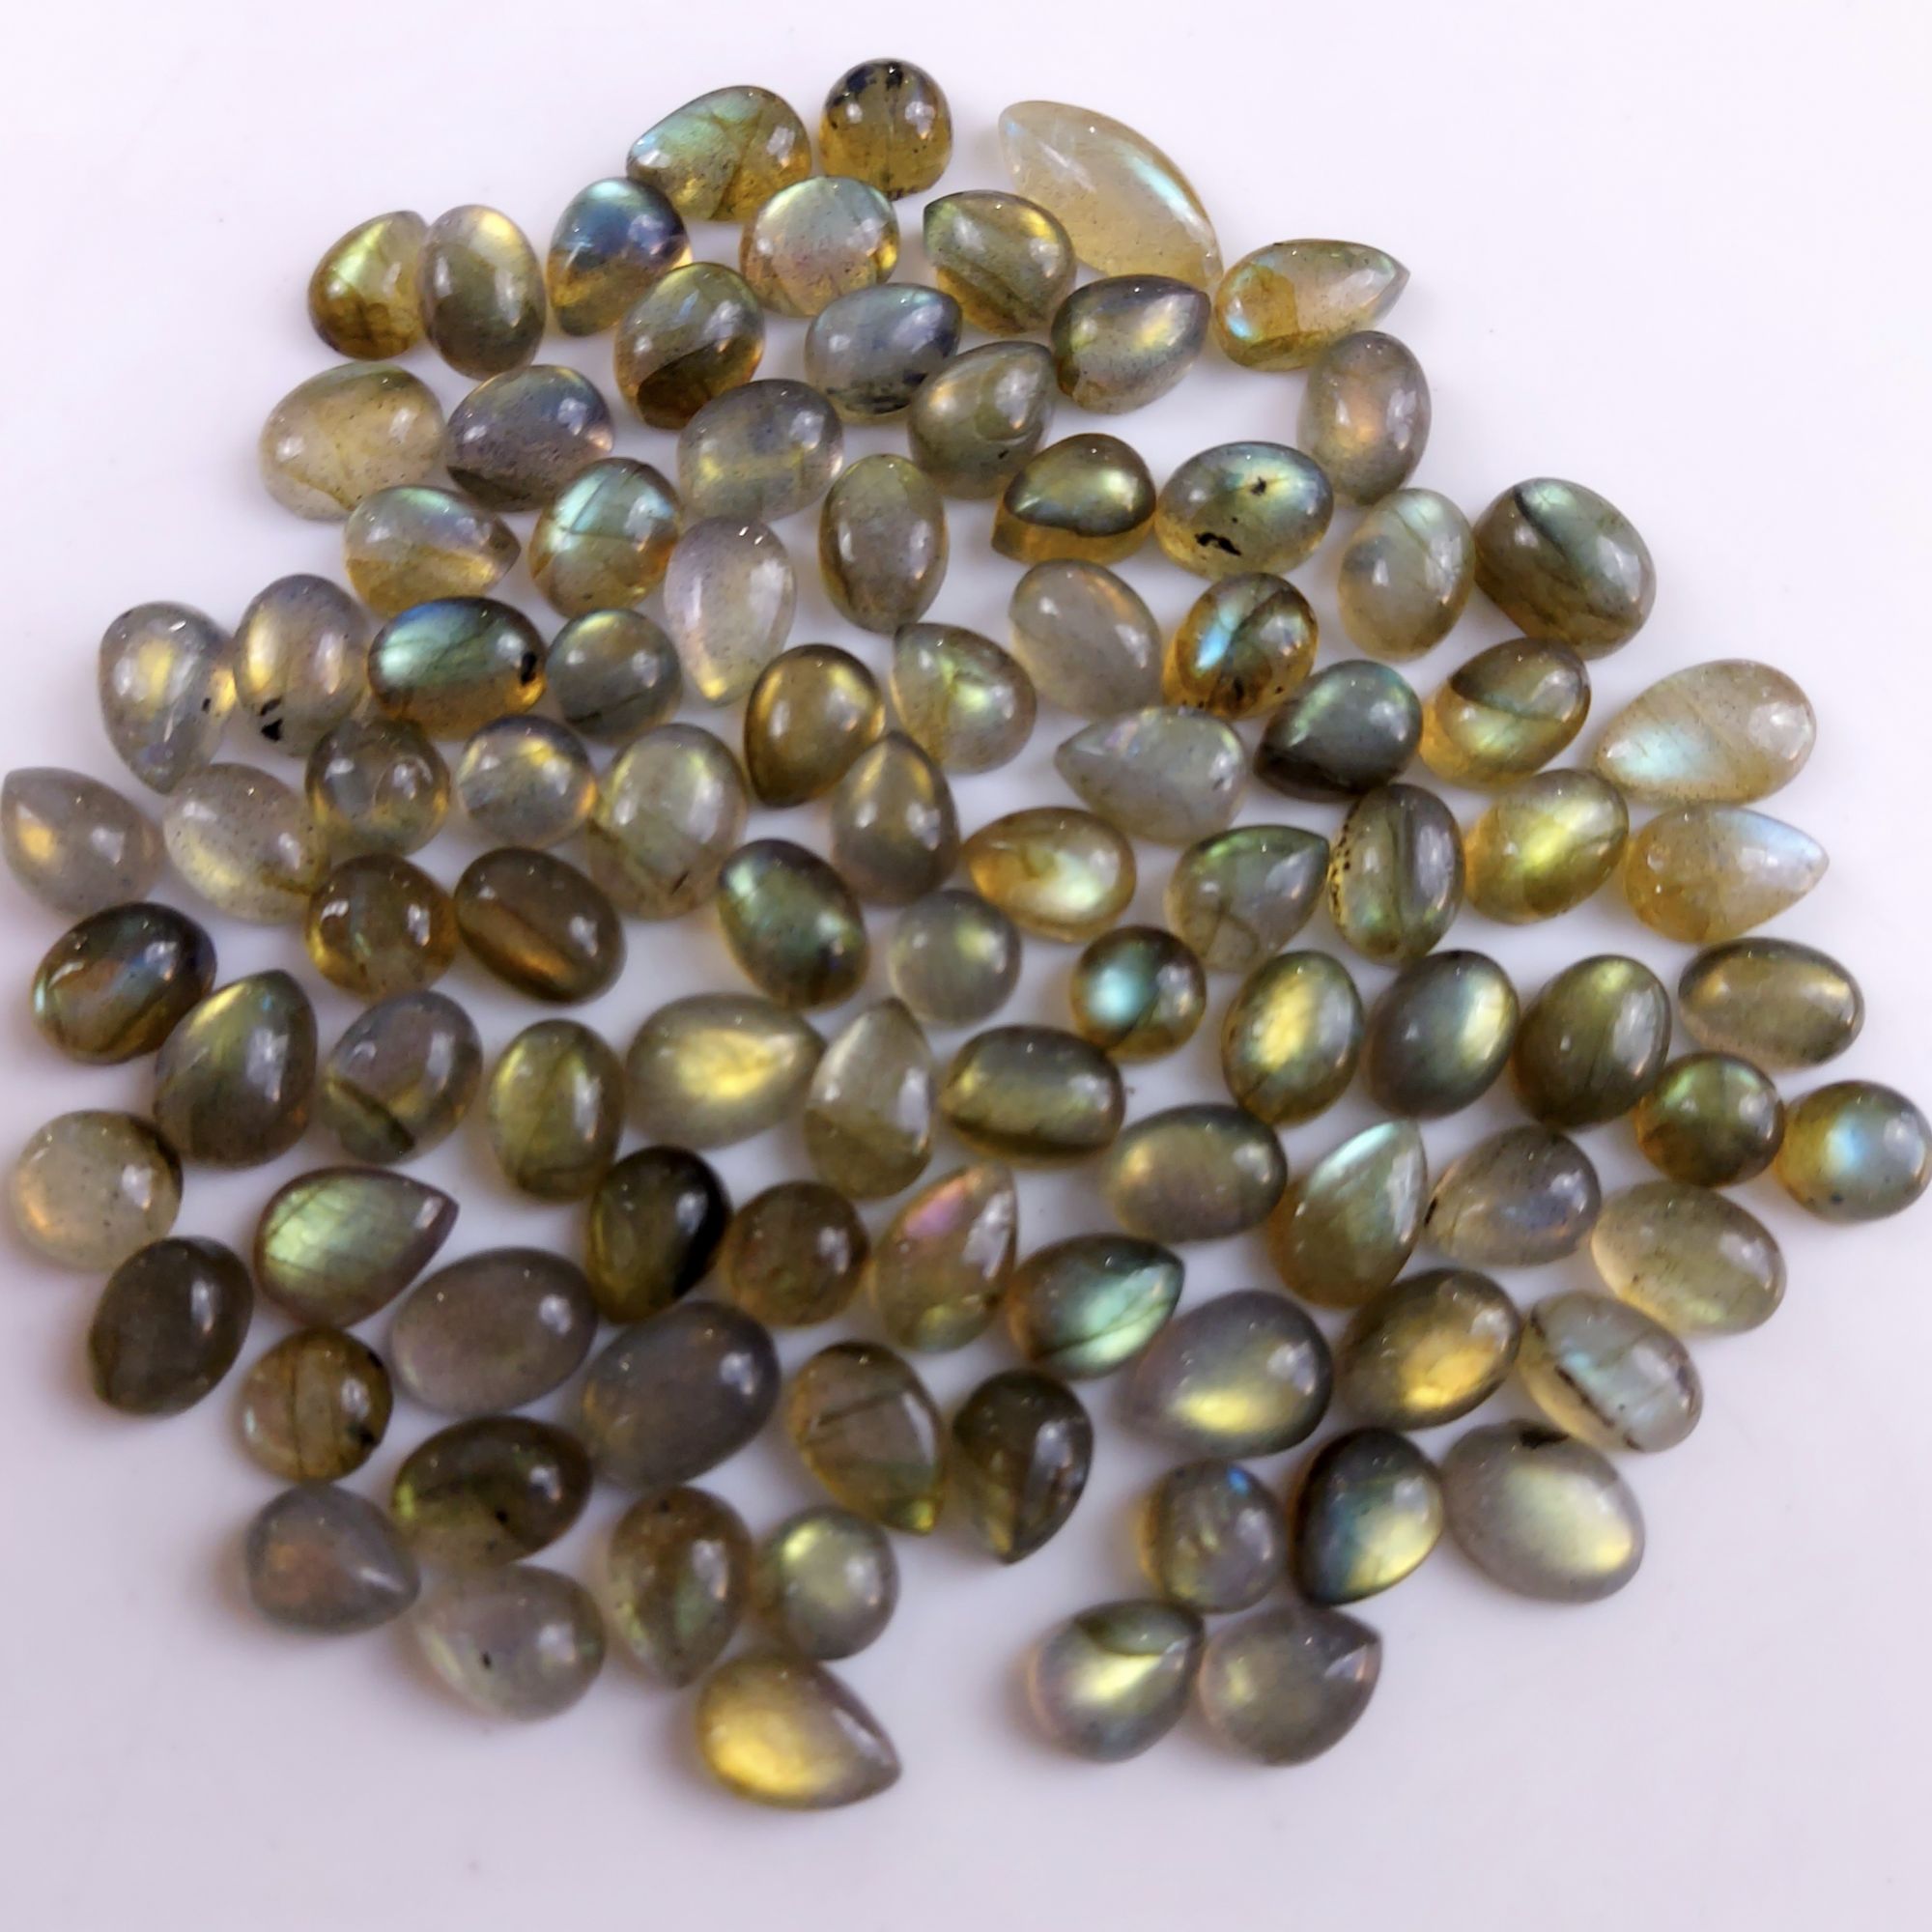 96 Pcs164Cts Natural Multifire Labradorite Loose Cabochon Gemstone Lot for Jewelry Making  11x4 3x3mm#1065